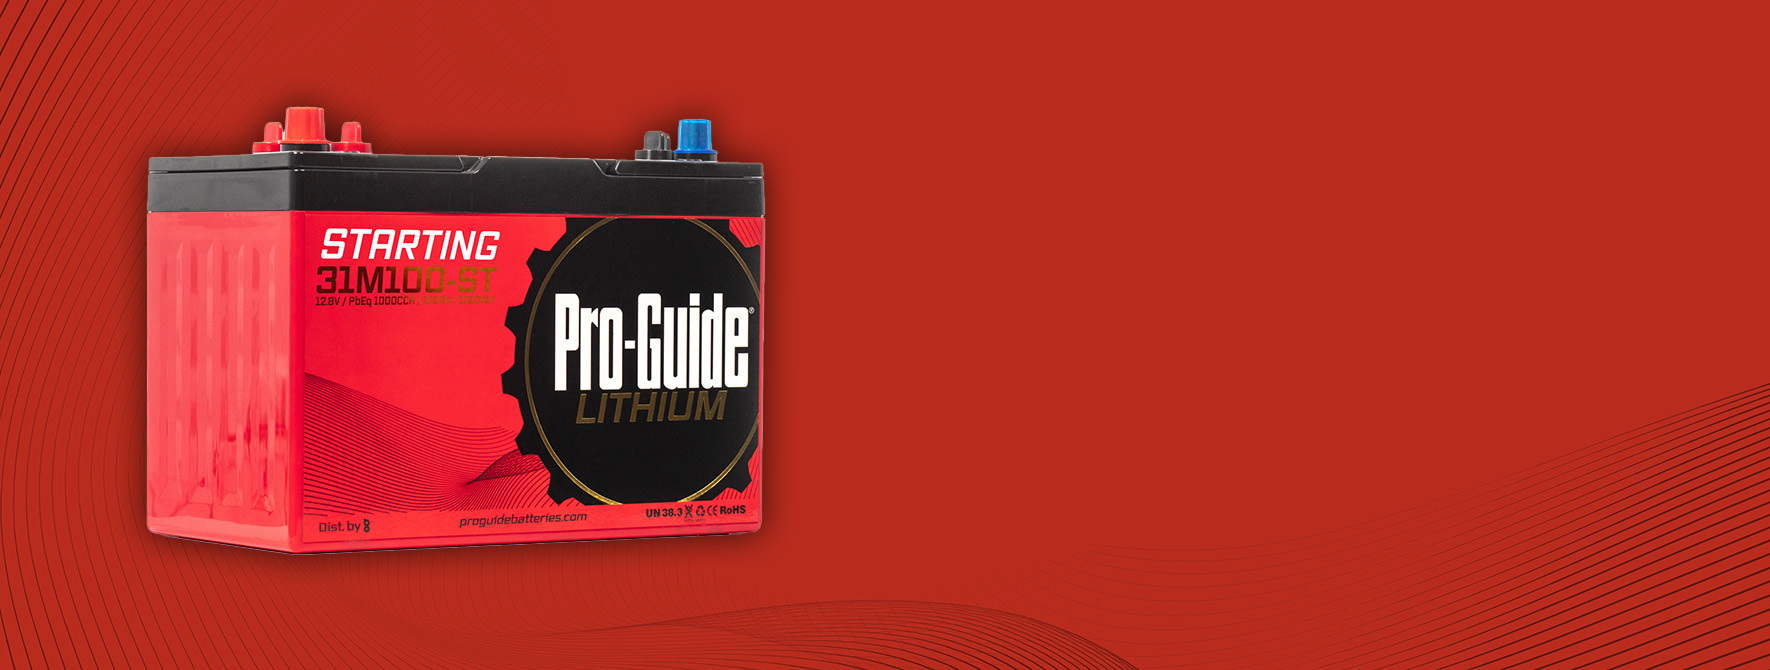 Pro-Guide Lithium 31M100-ST